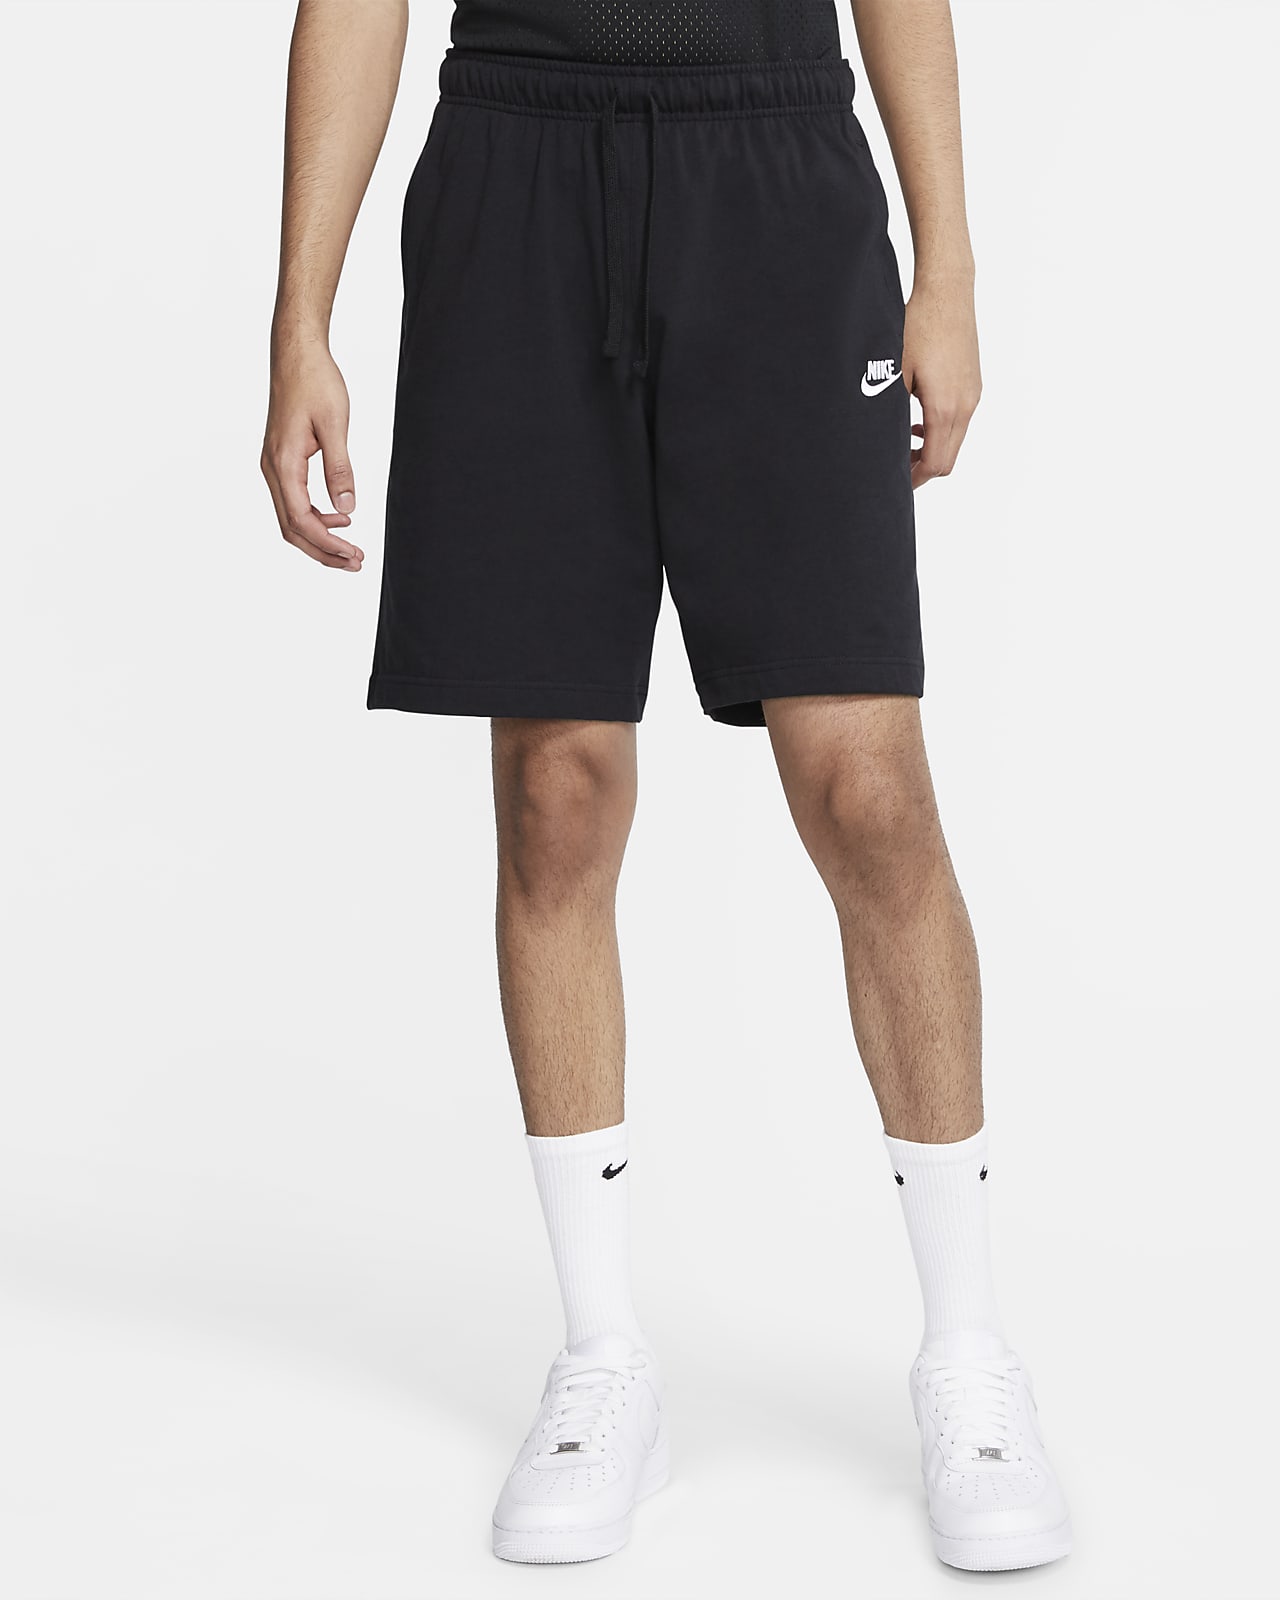 empezar Condicional enchufe Nike Sportswear Club Pantalón corto - Hombre. Nike ES